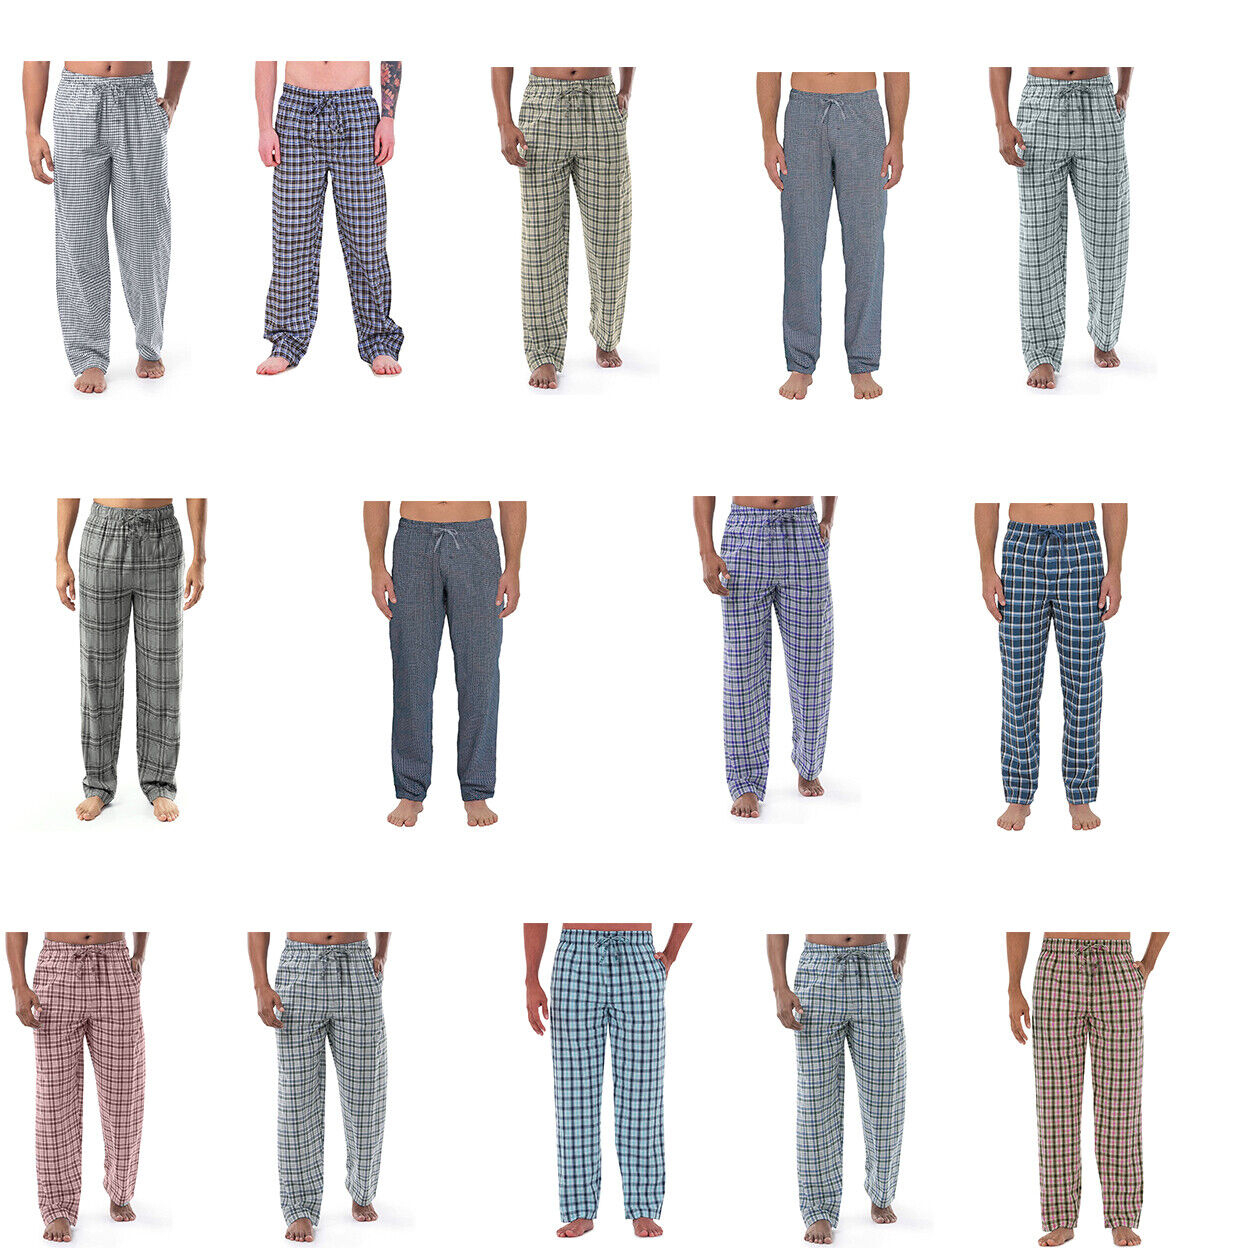 Men's Ultra-Soft Plaid Cotton Jersey Knit Comfy Sleep Lounge Pajama Pants - Red, Small